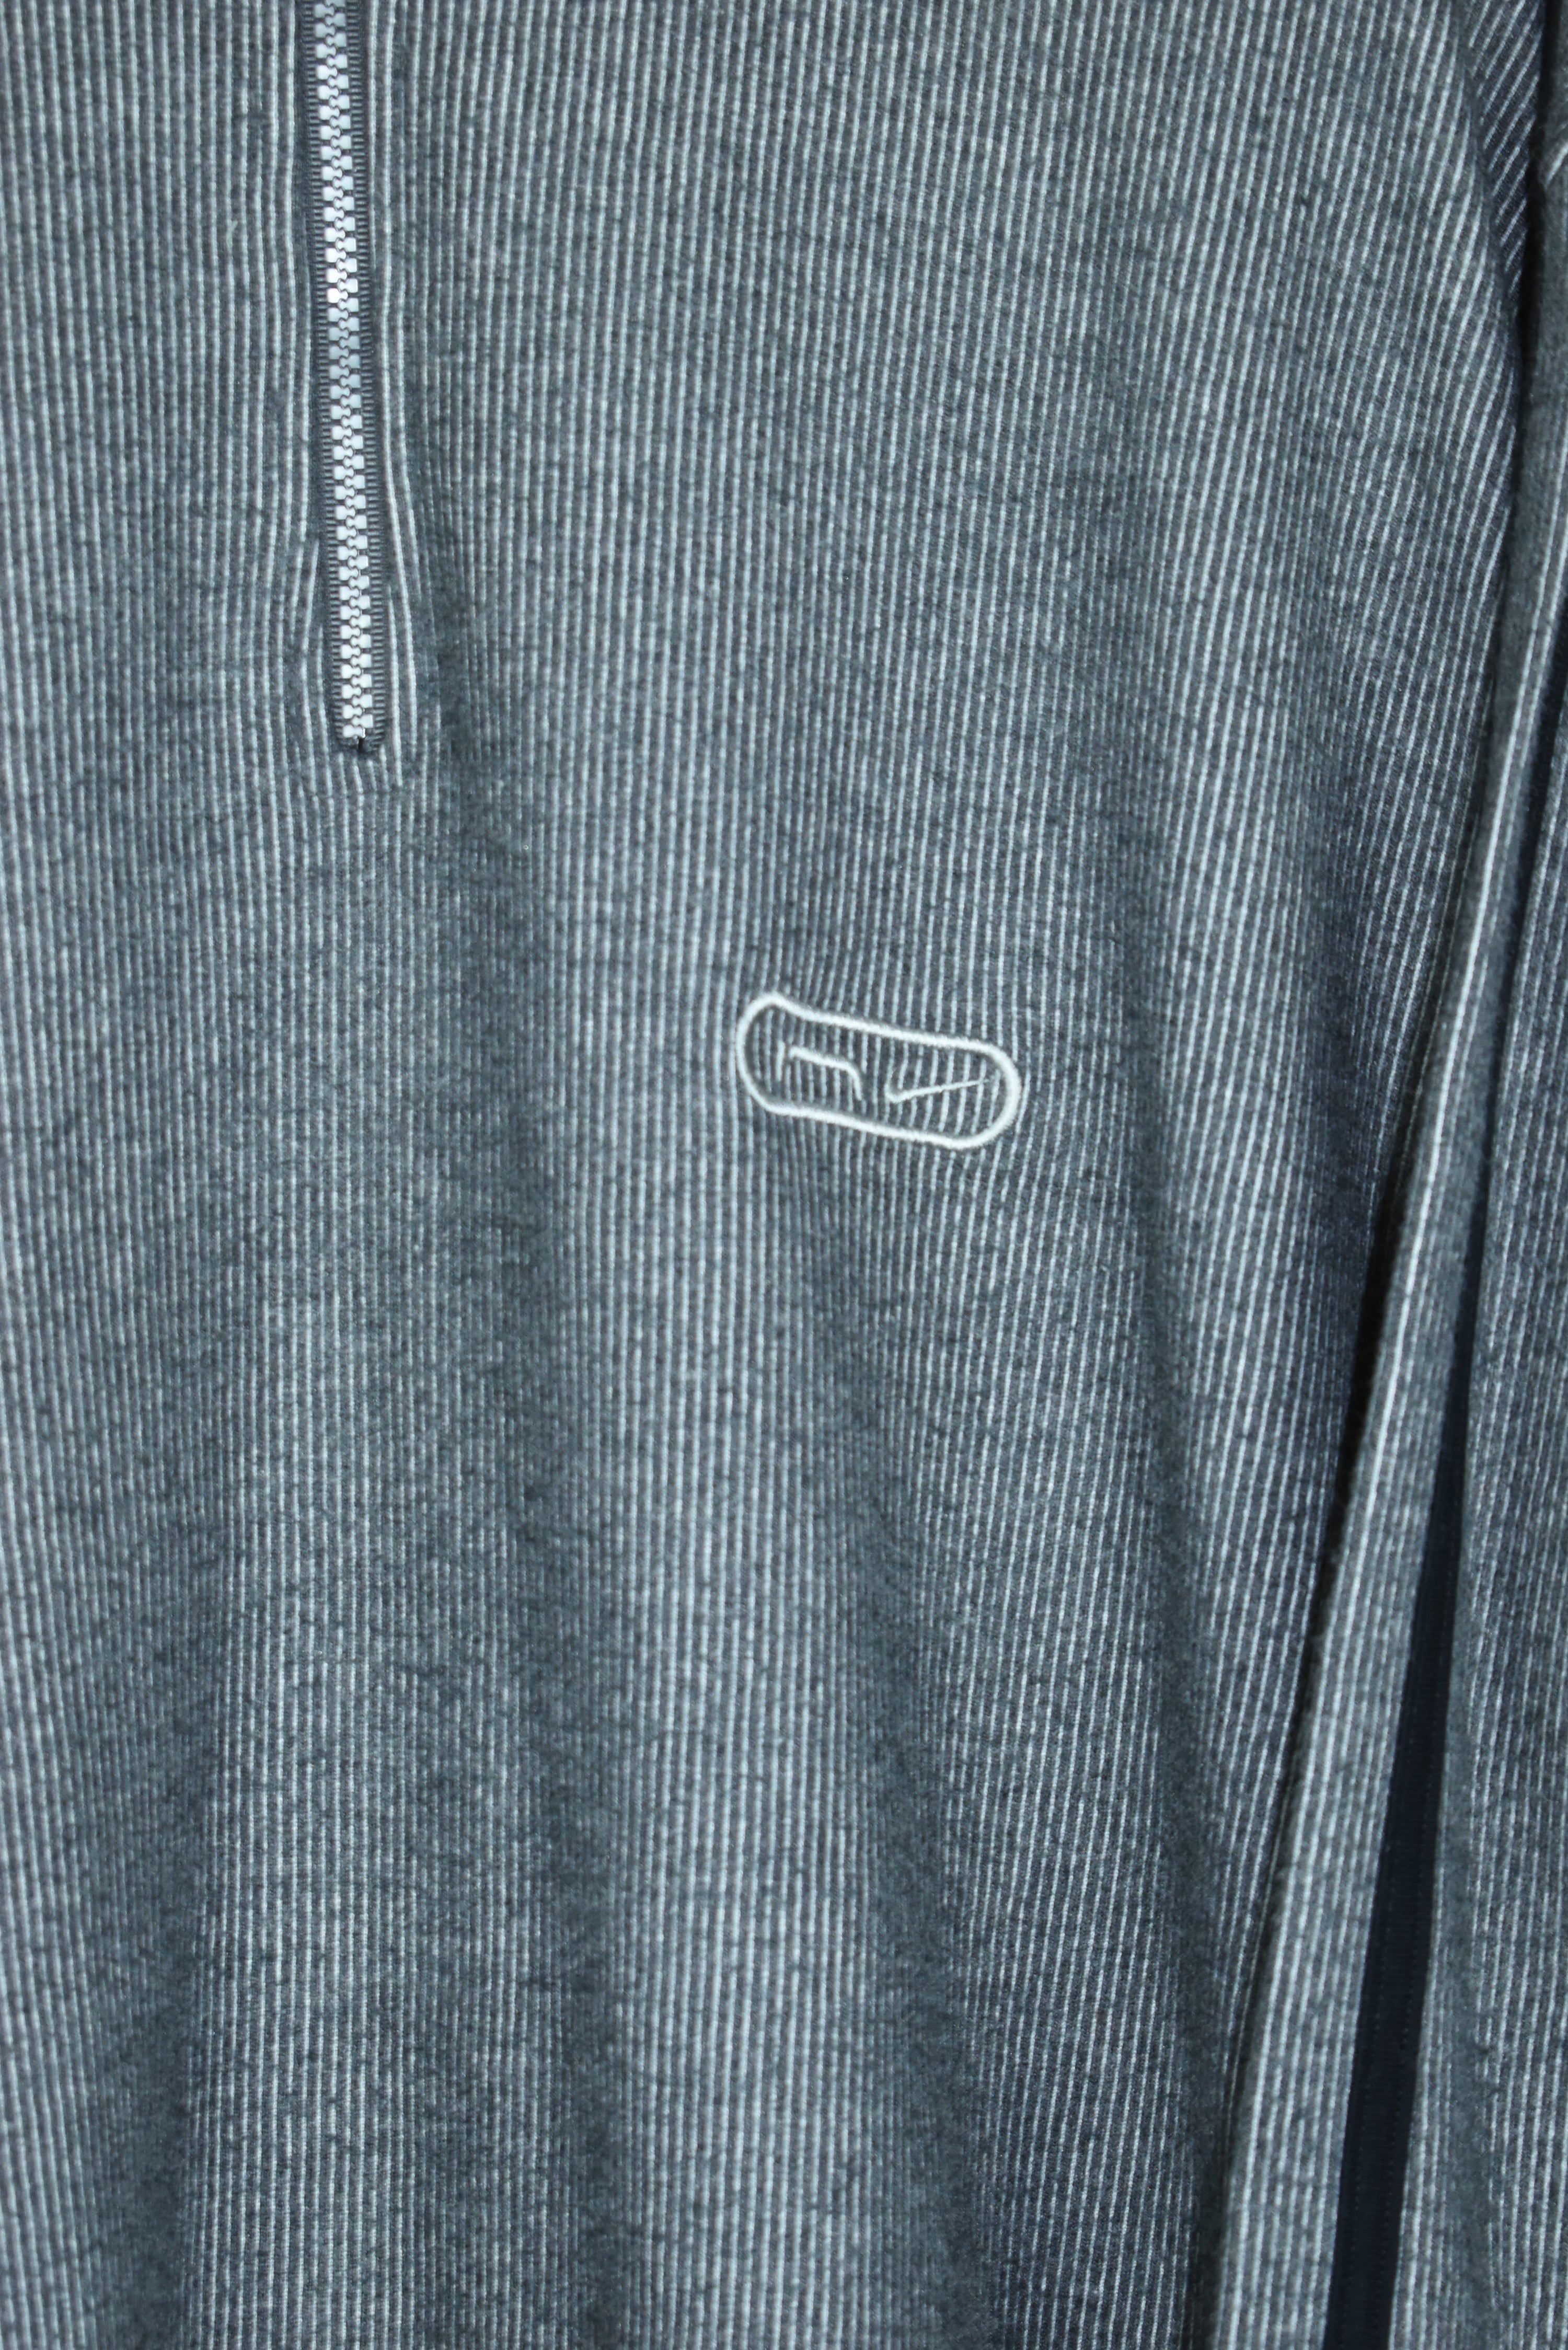 Vintage Nike Embroidery 1/4 Zip Grey Xlarge